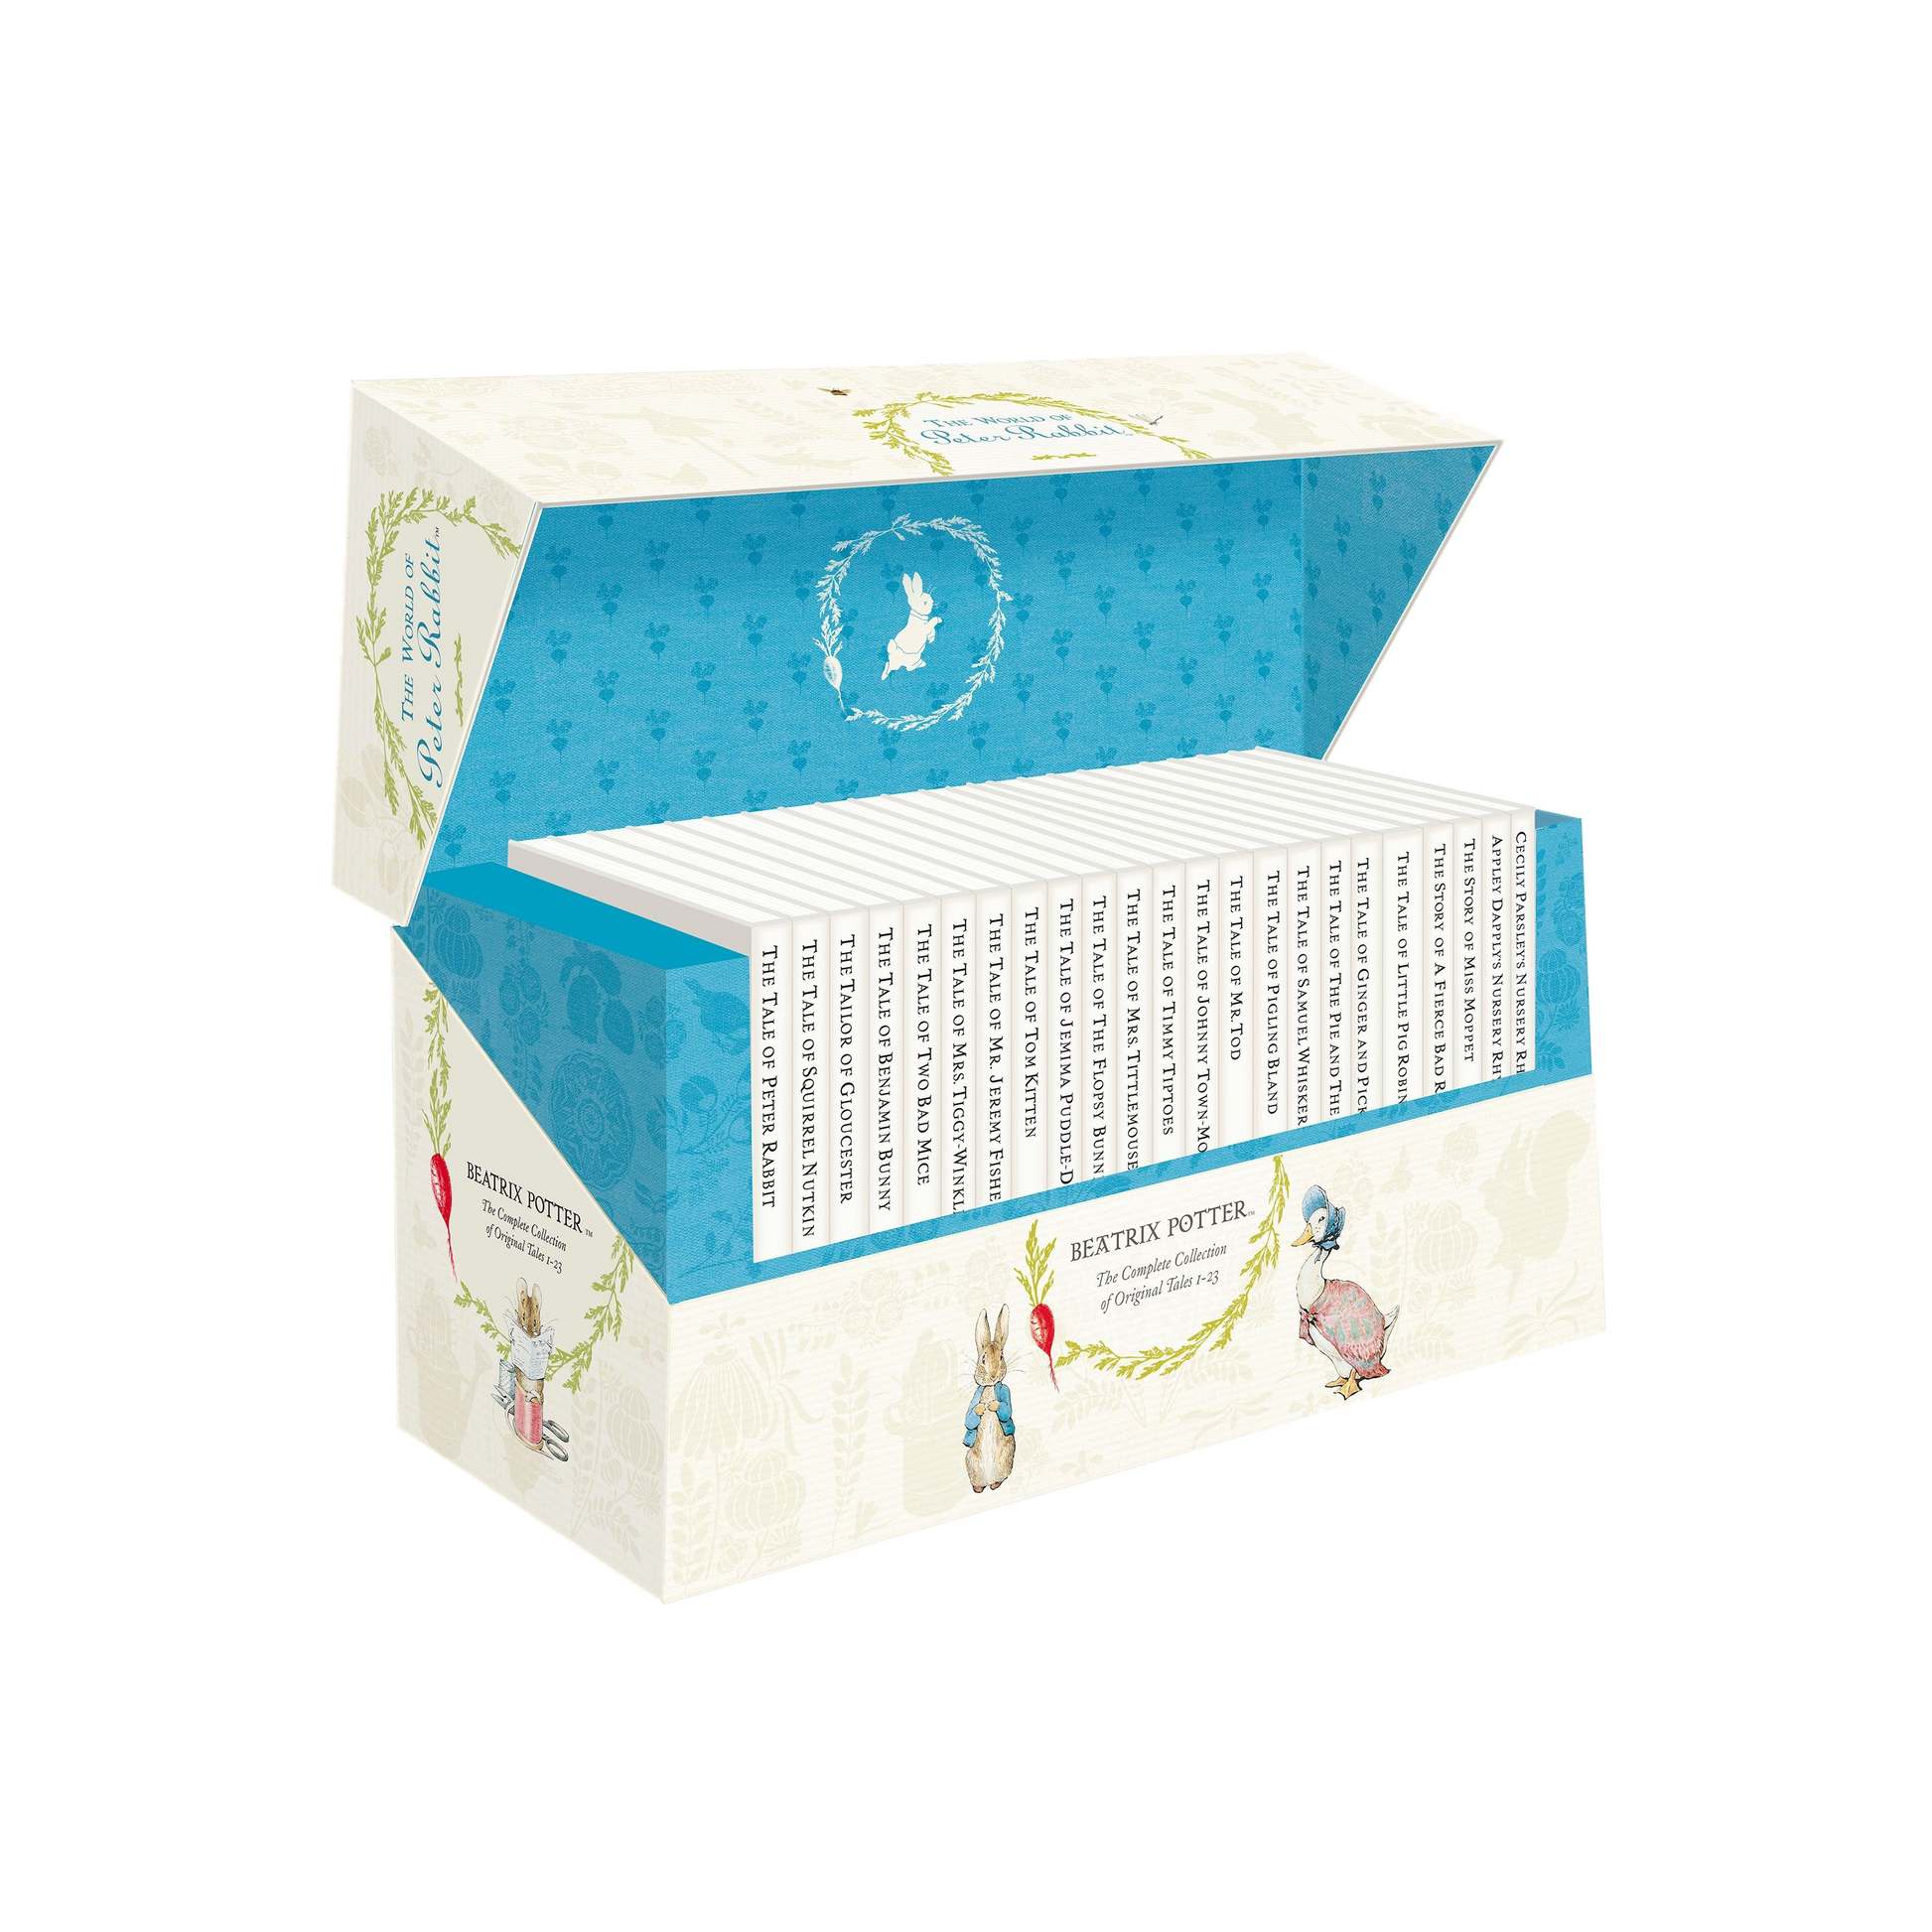 Peter Rabbit Box Collection Set (23 Books)